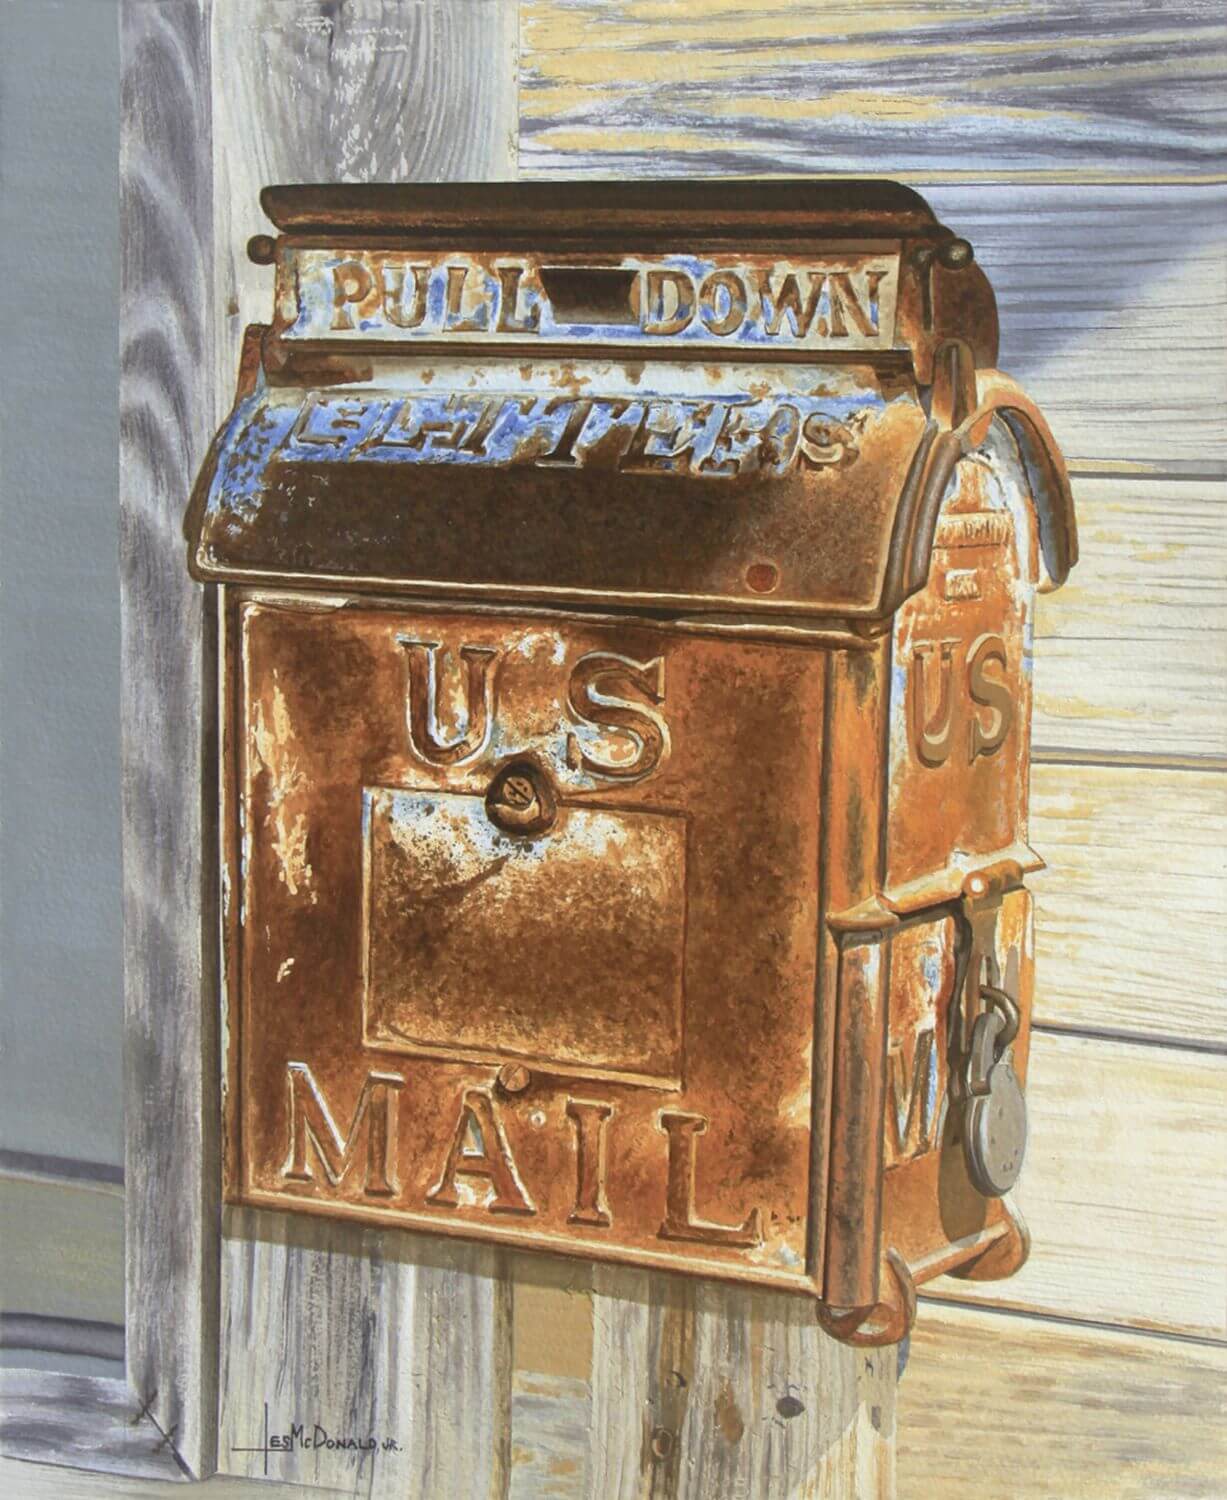 "U.S. Mail"